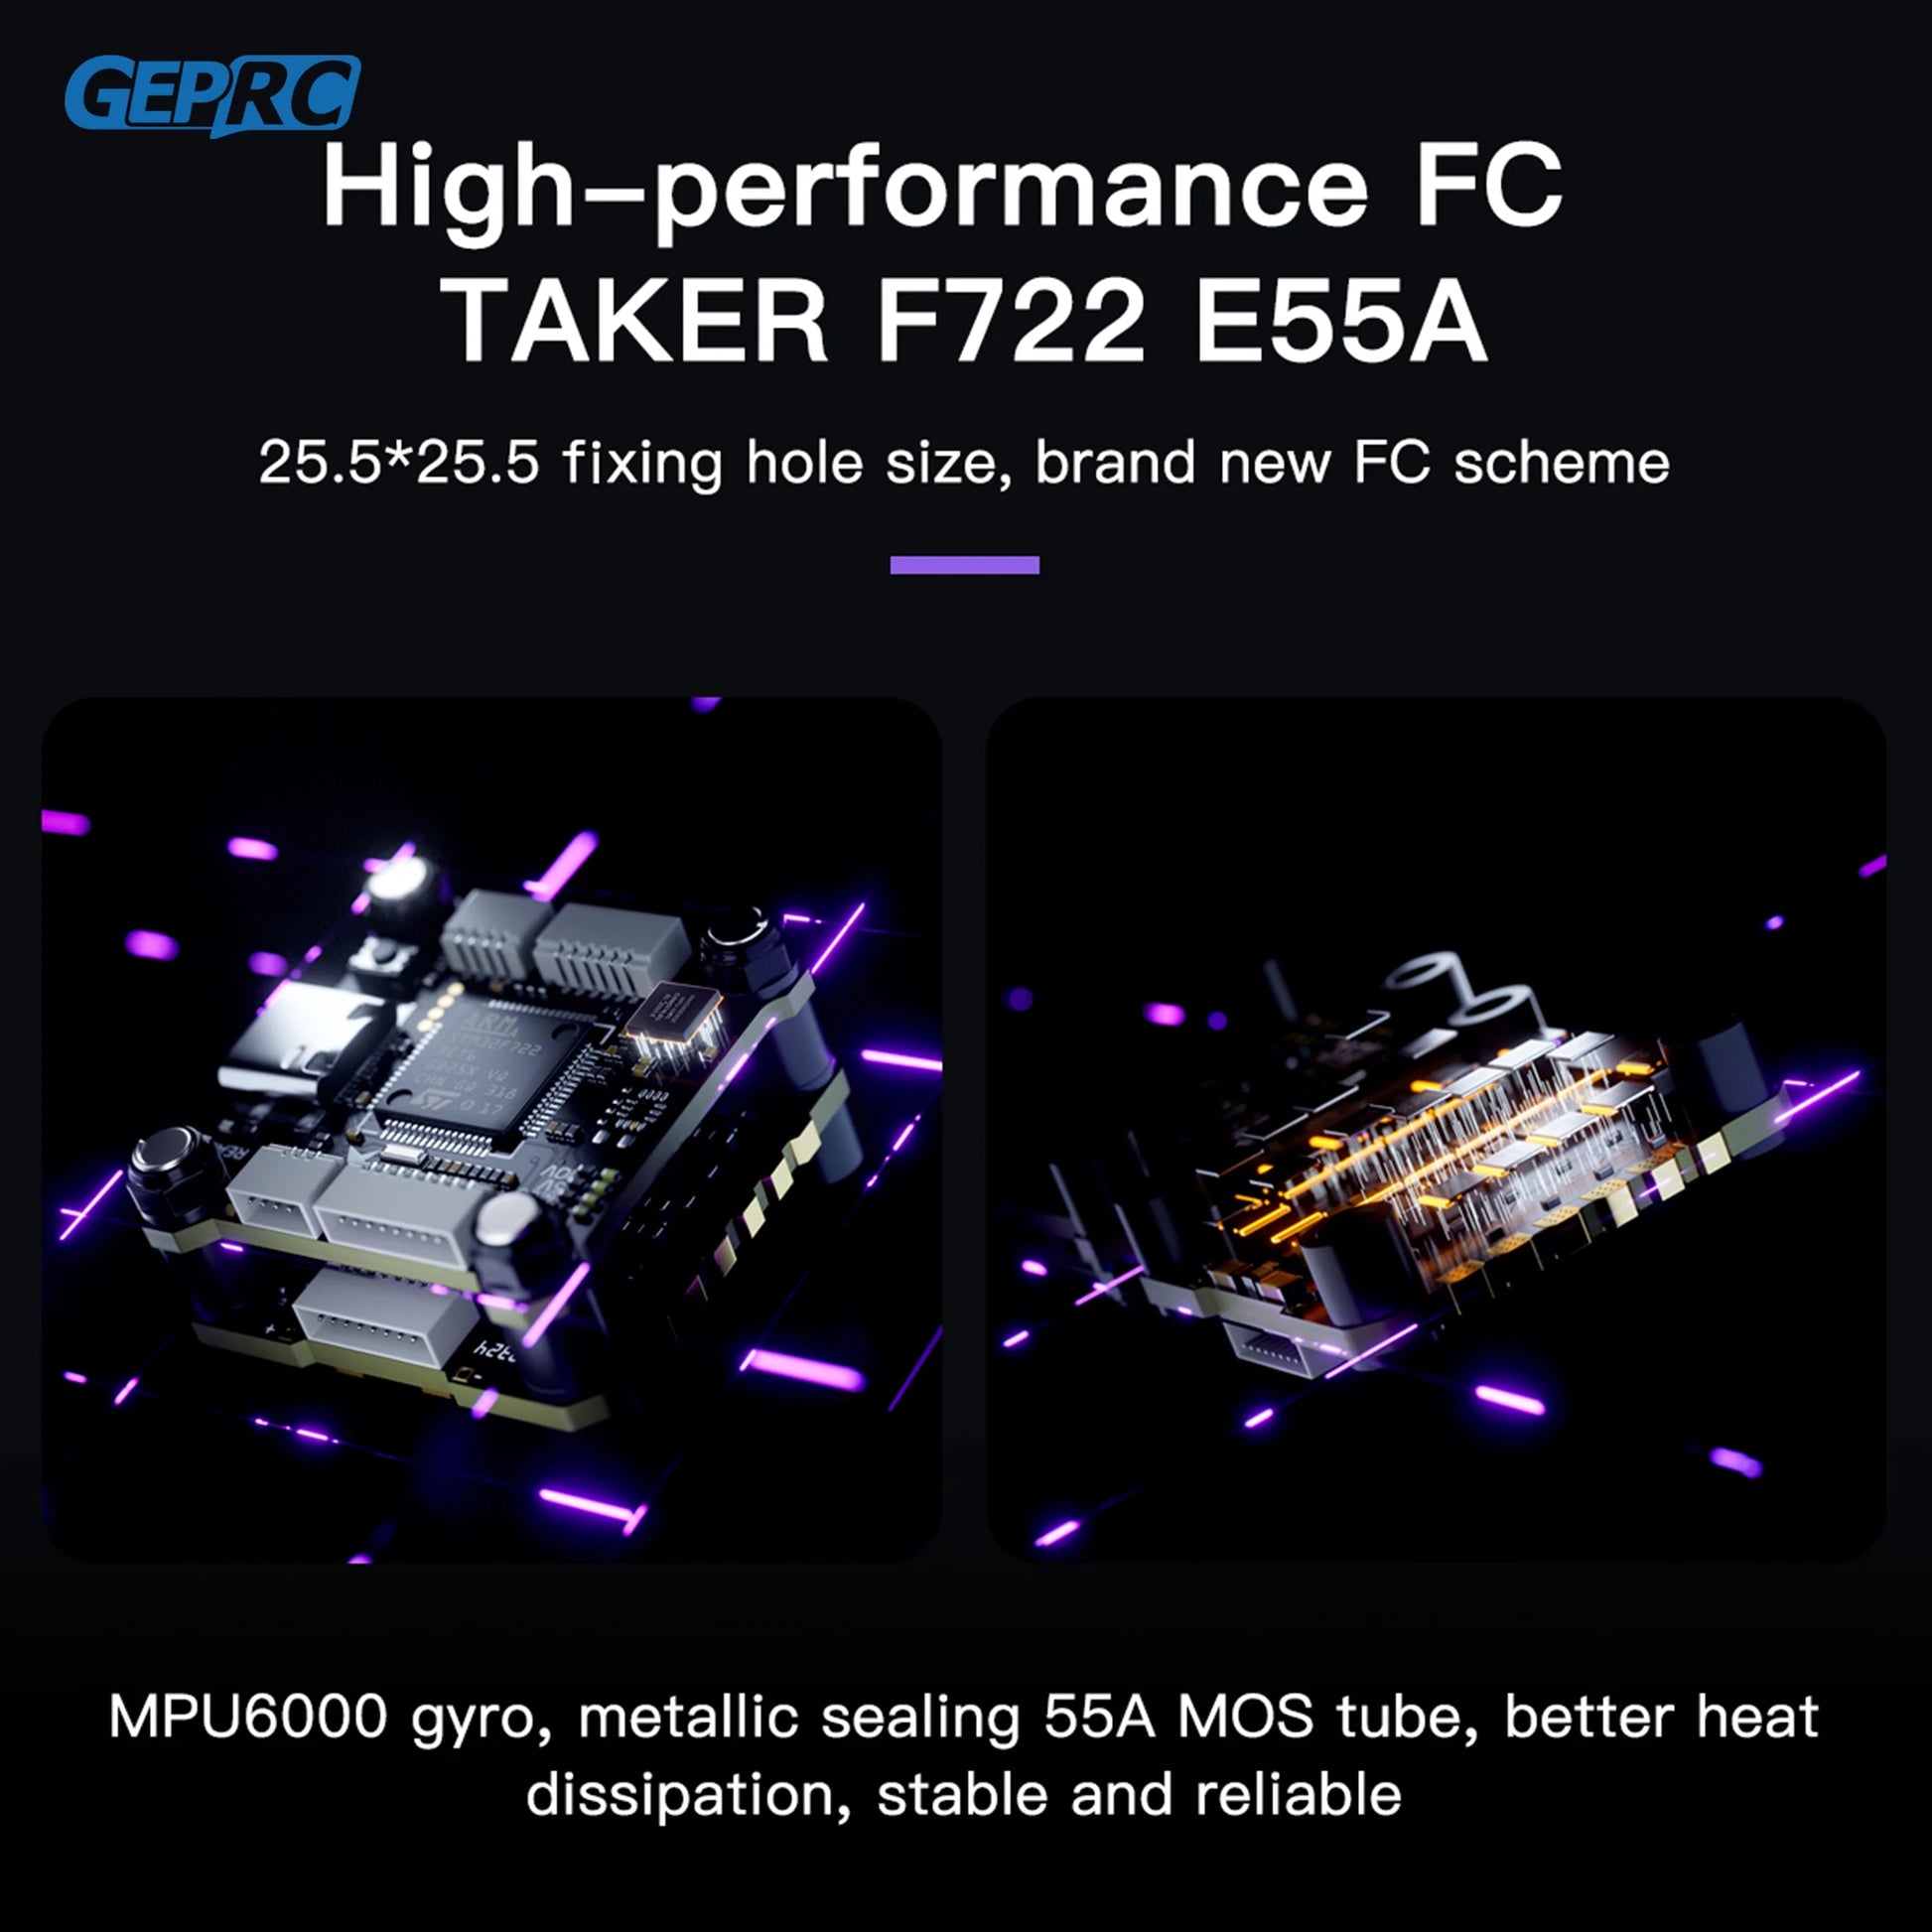 GEPRC High-performance FC TAKER F722 E55A 25.5*